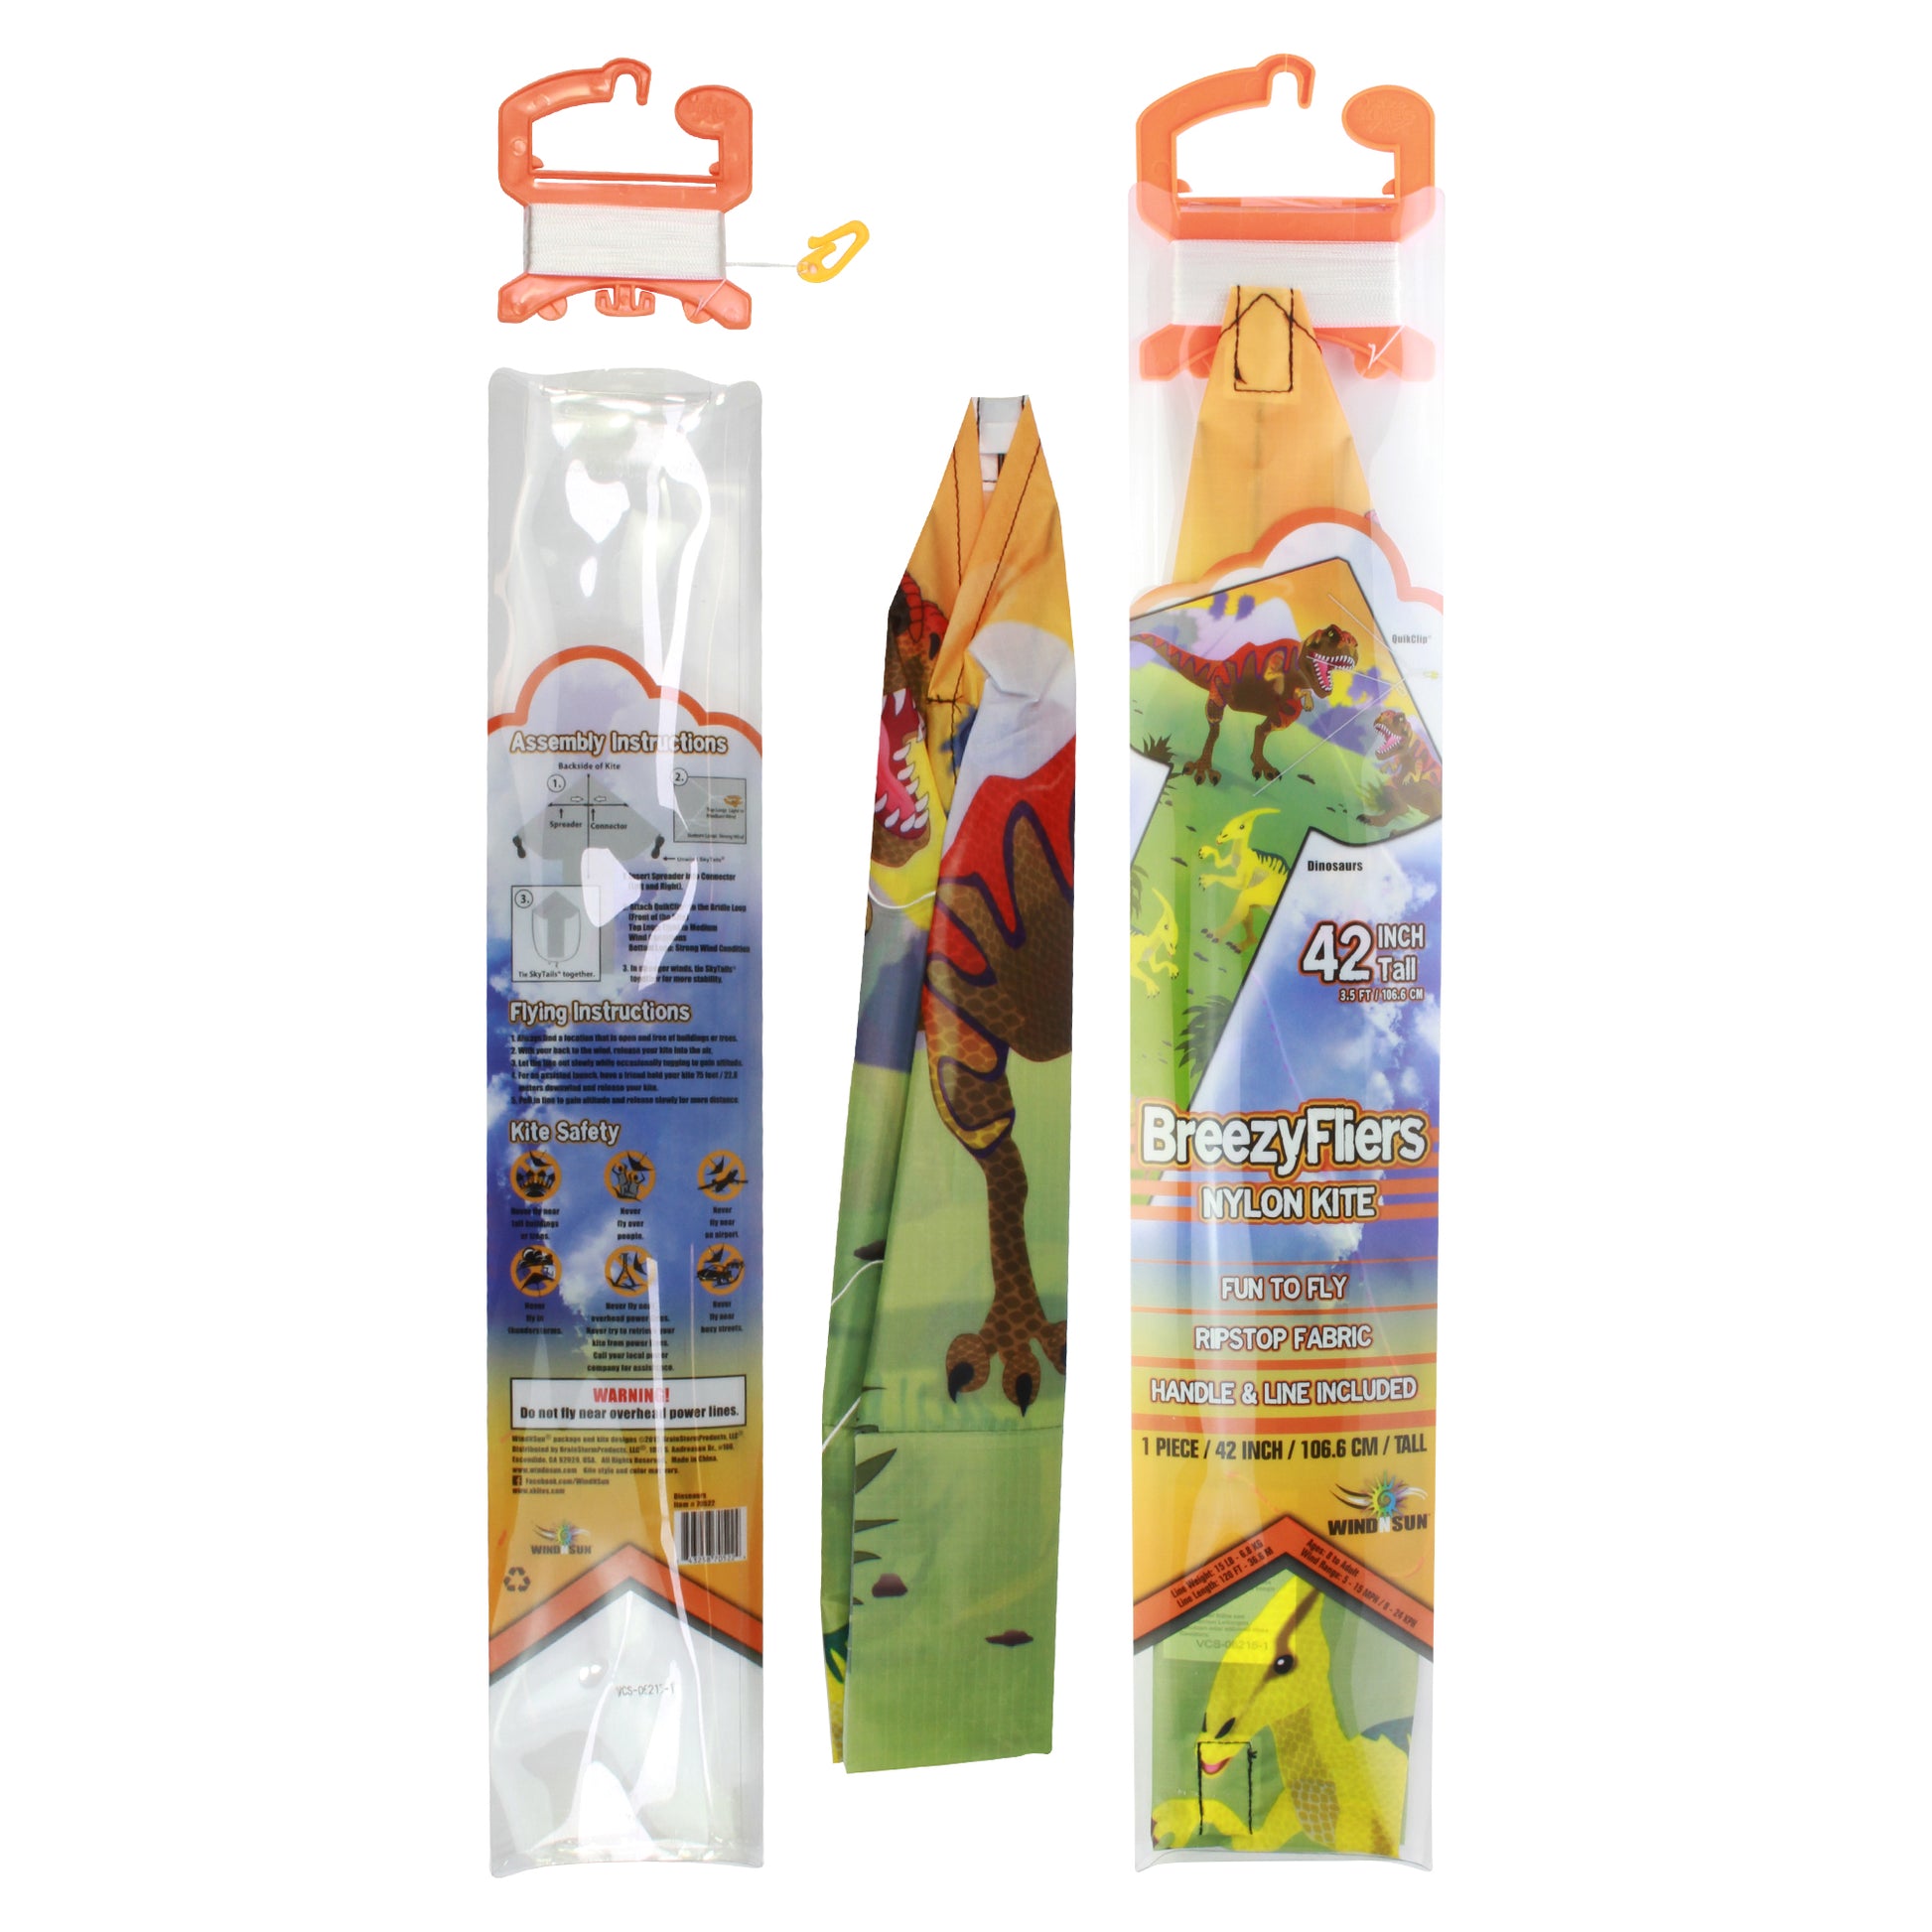 windnsun breezyfliers dinosaurs nylon kite package